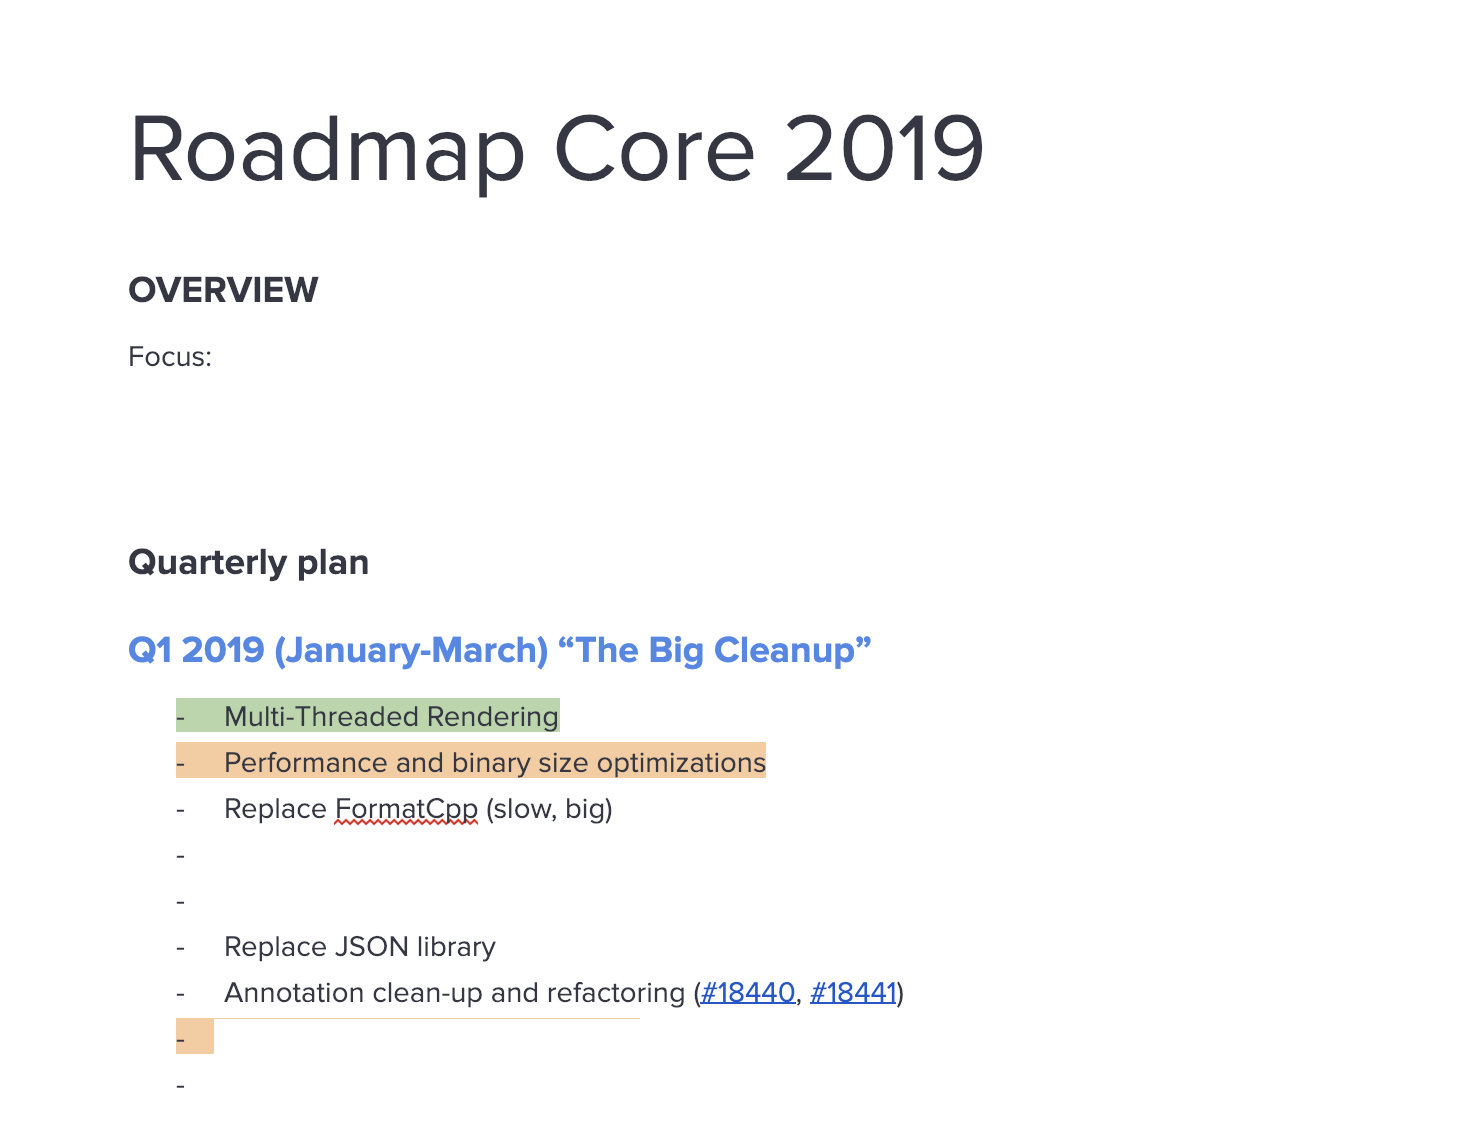 Roadmap core screenshot